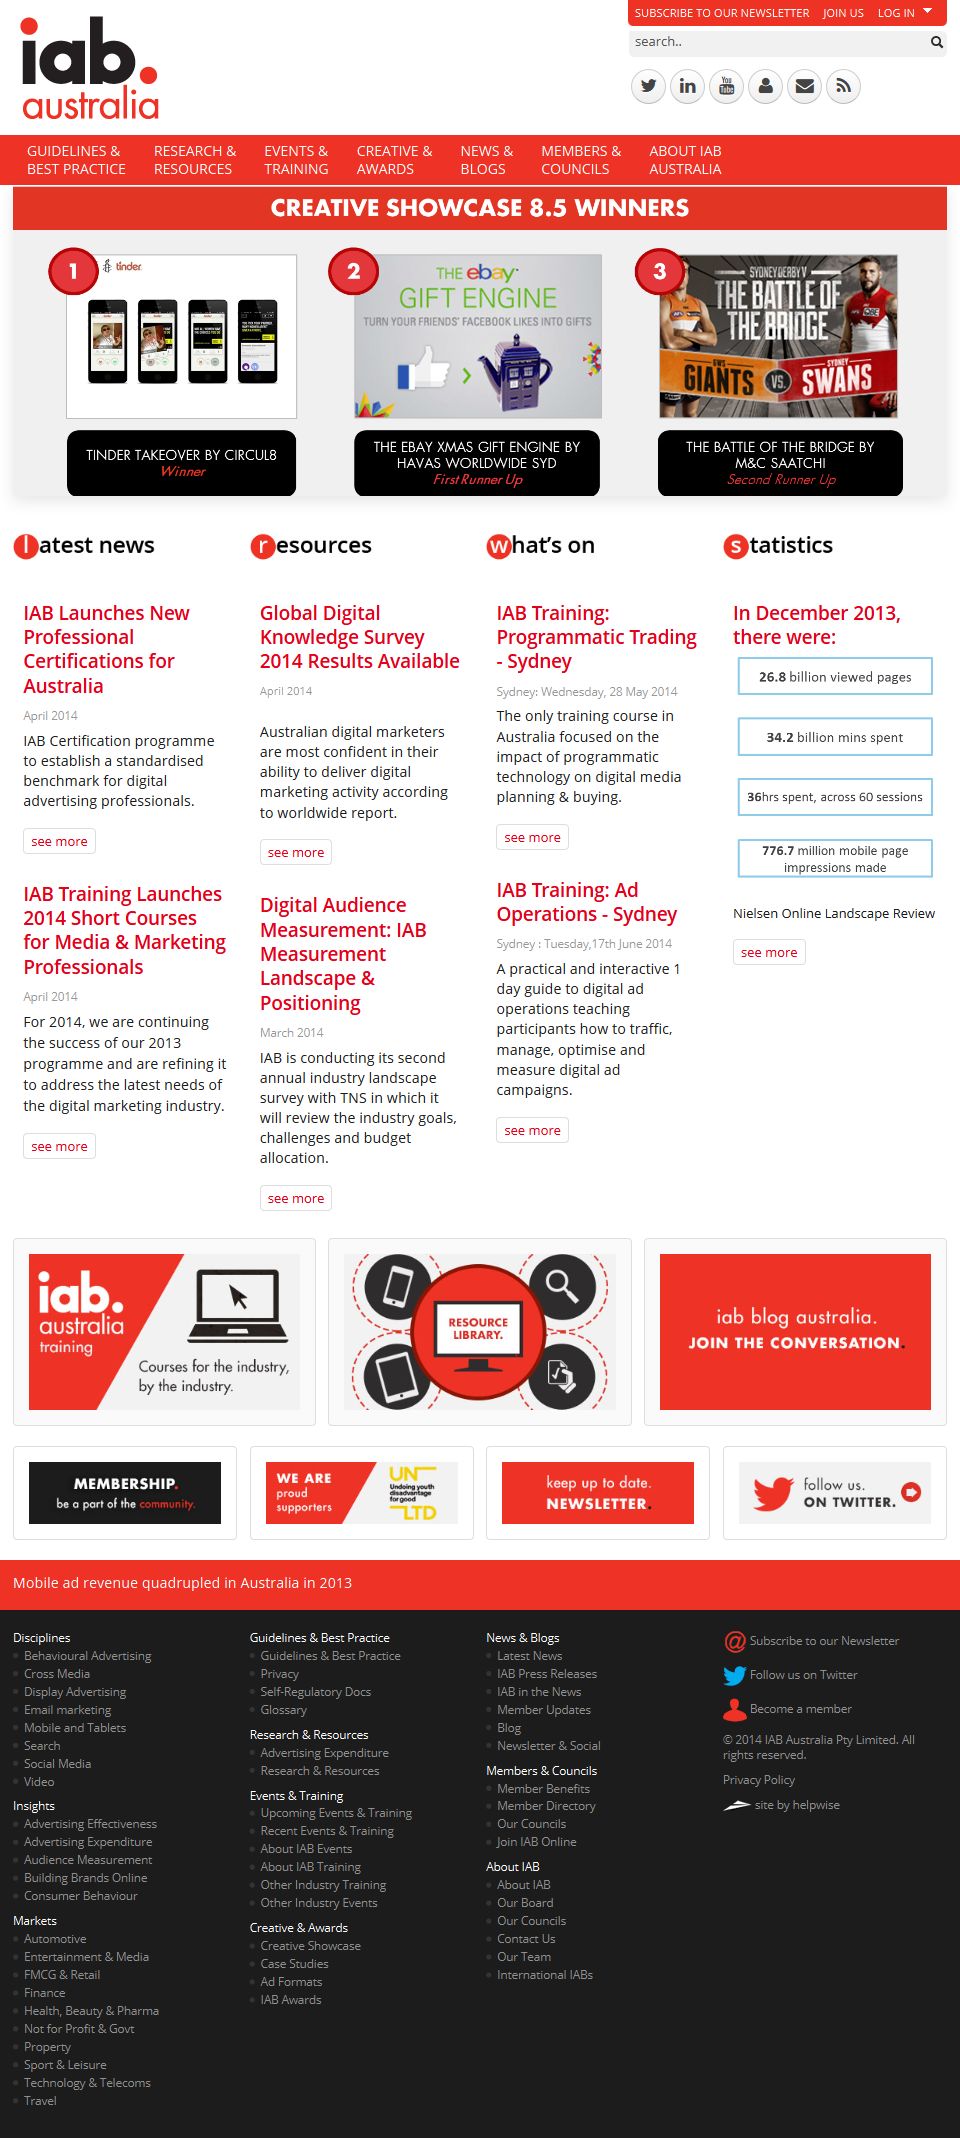 The Interactive Advertising Bureau (IAB)